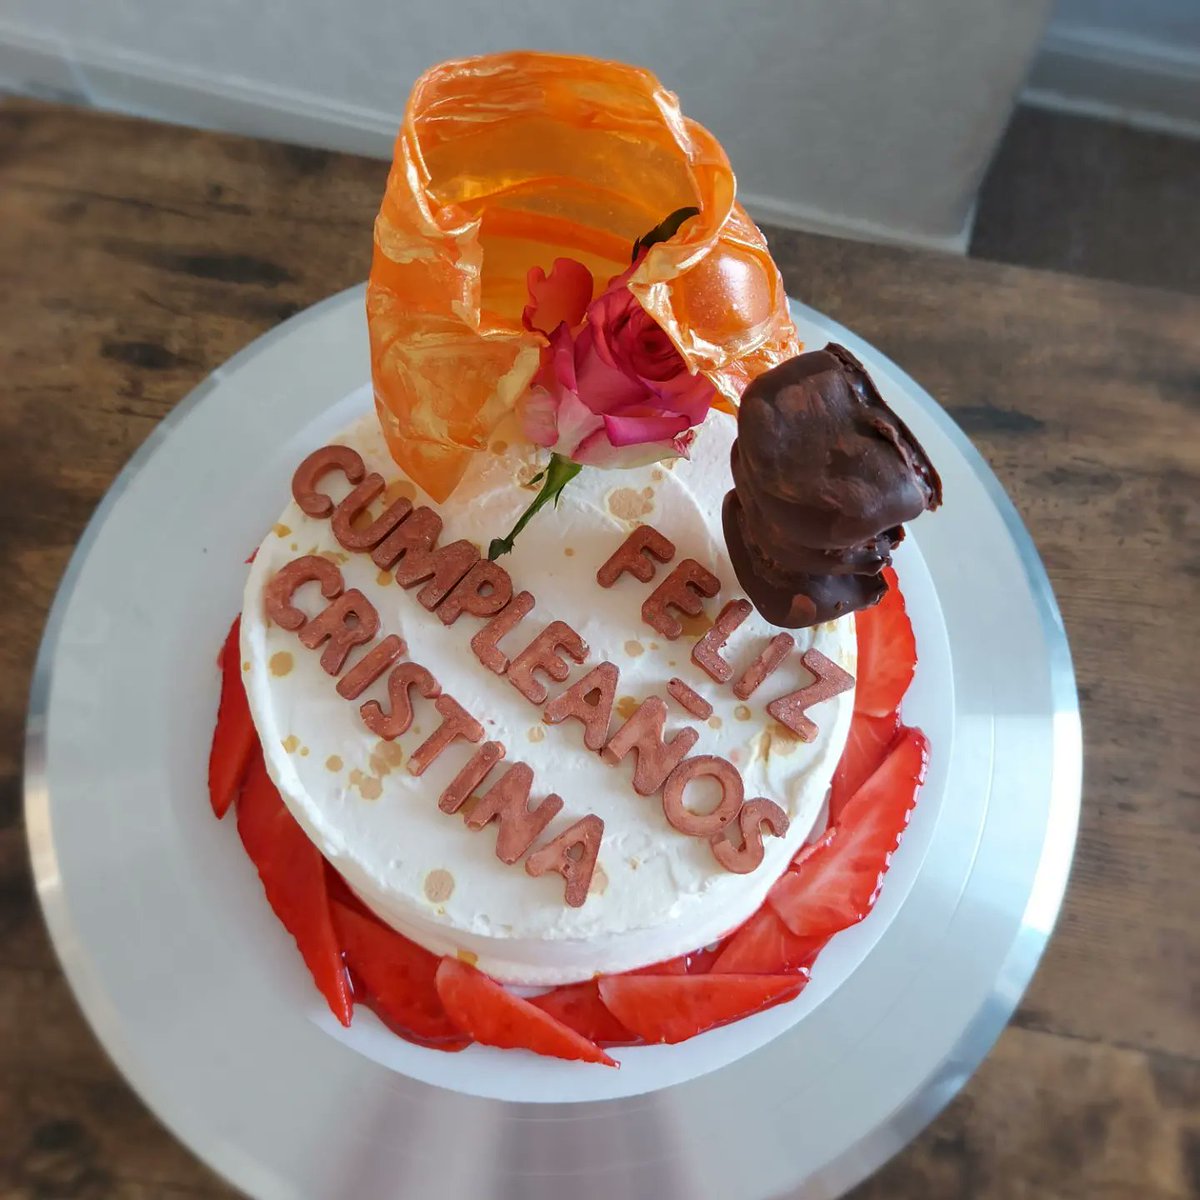 #Birthday #Weddings #Graduations #babyshower #chocolatecake #vanilla #seminaked #decoratedcakes #bestcakes #partycakes #specialcakes #happeebirthdae 
Many memorables moments involve cake